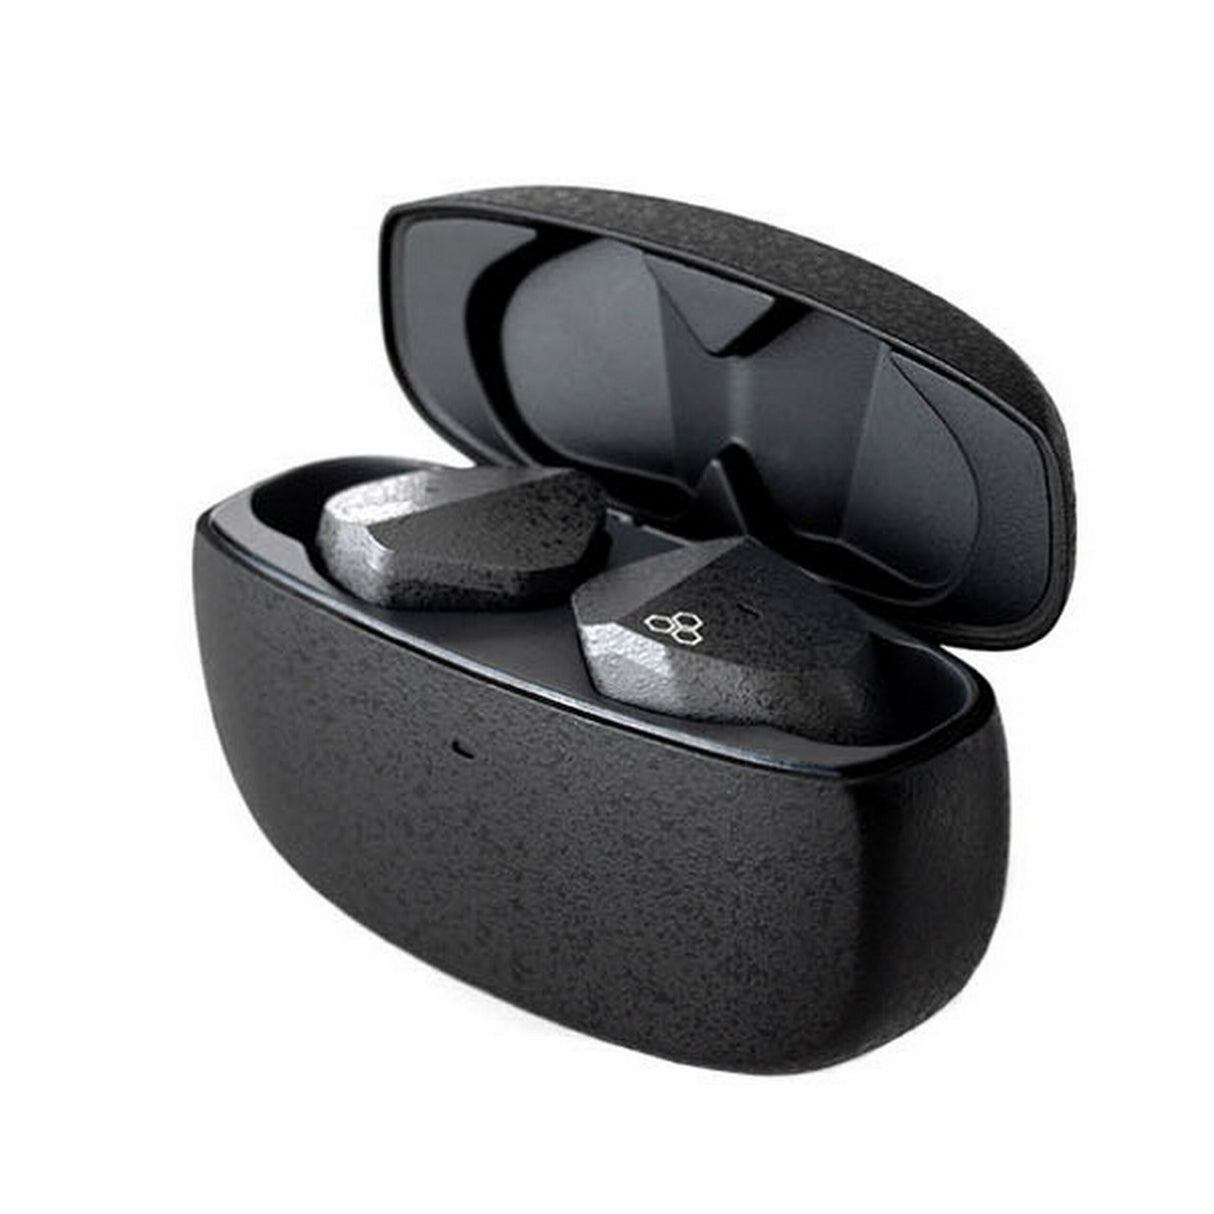 Final Audio ZE3000 Hi-Fi Sound Bluetooth Wireless Earbuds, Black